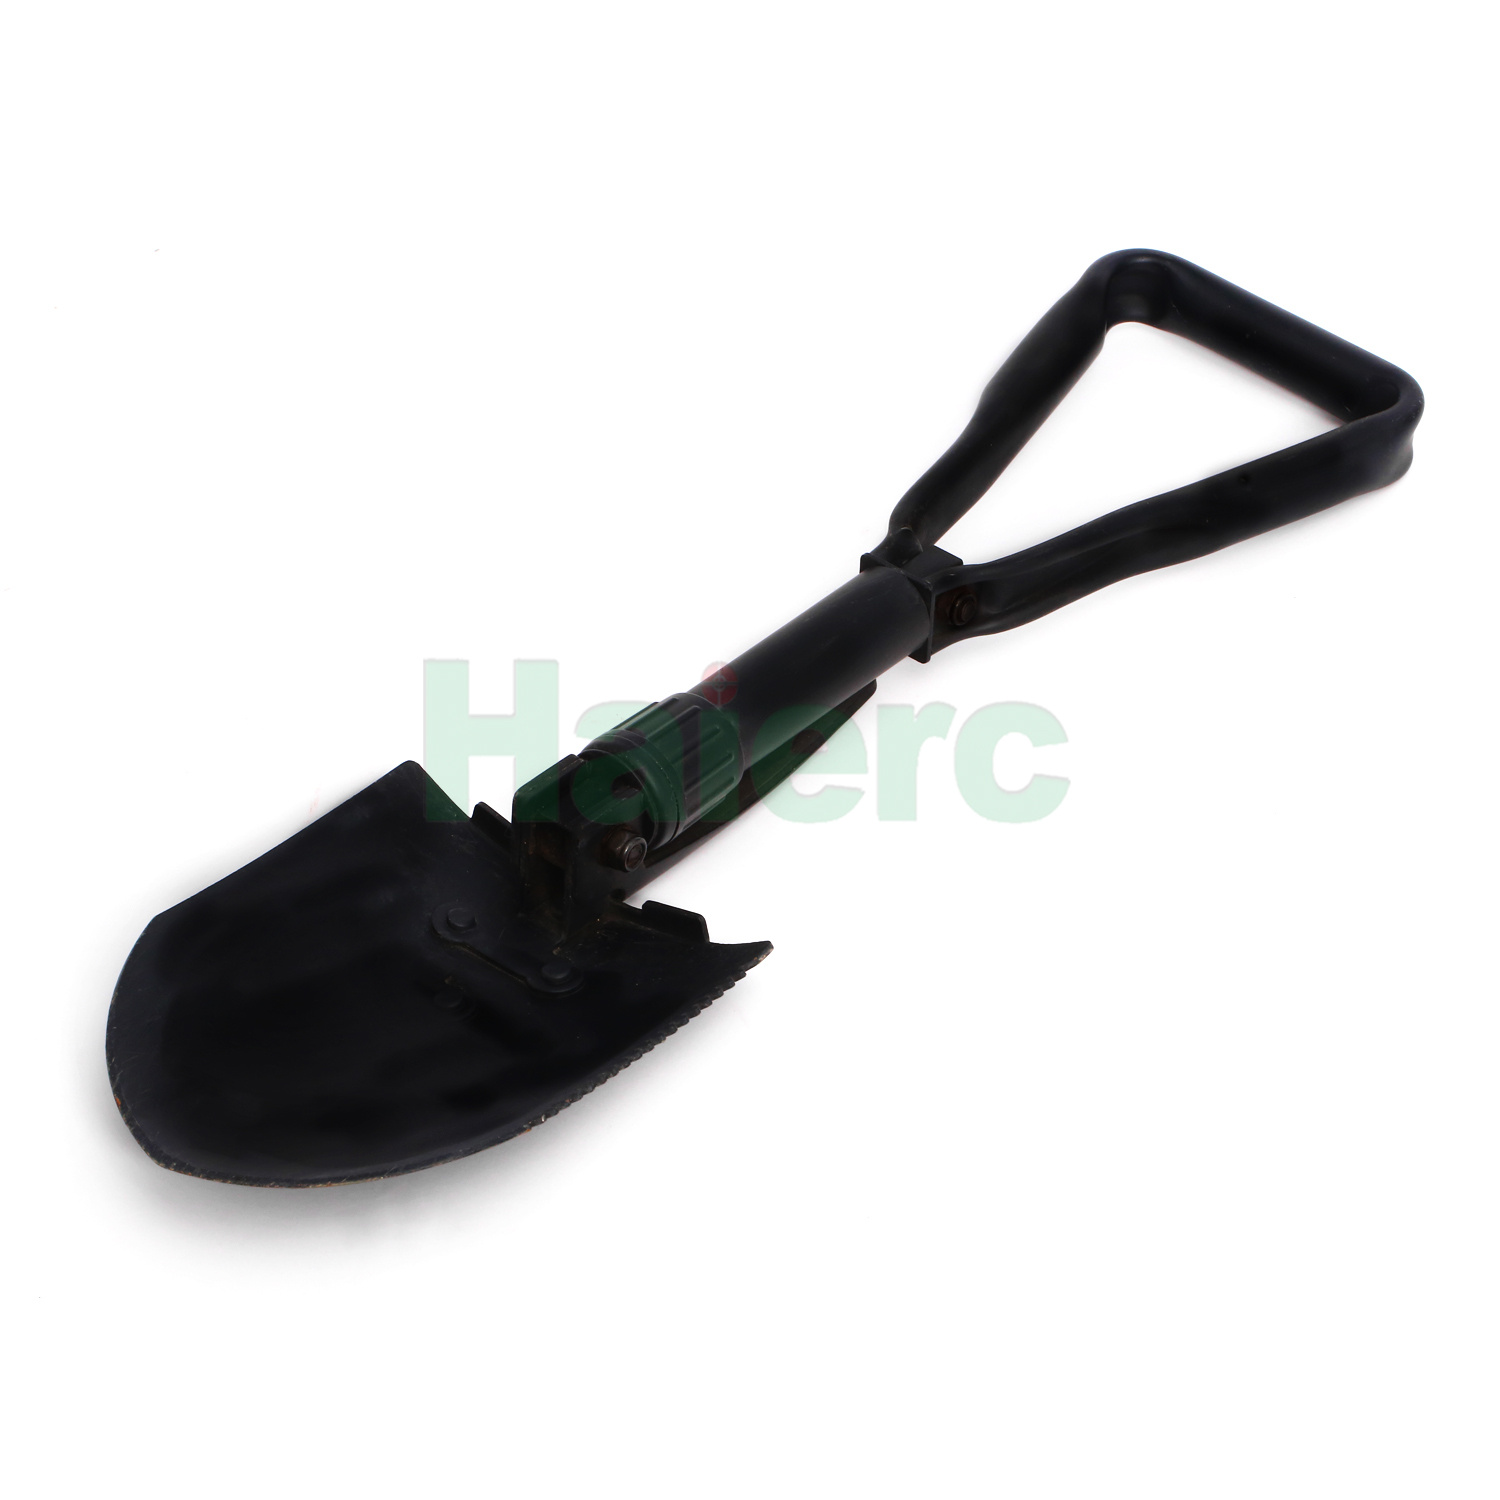 >Haierc multi functional folding shovel